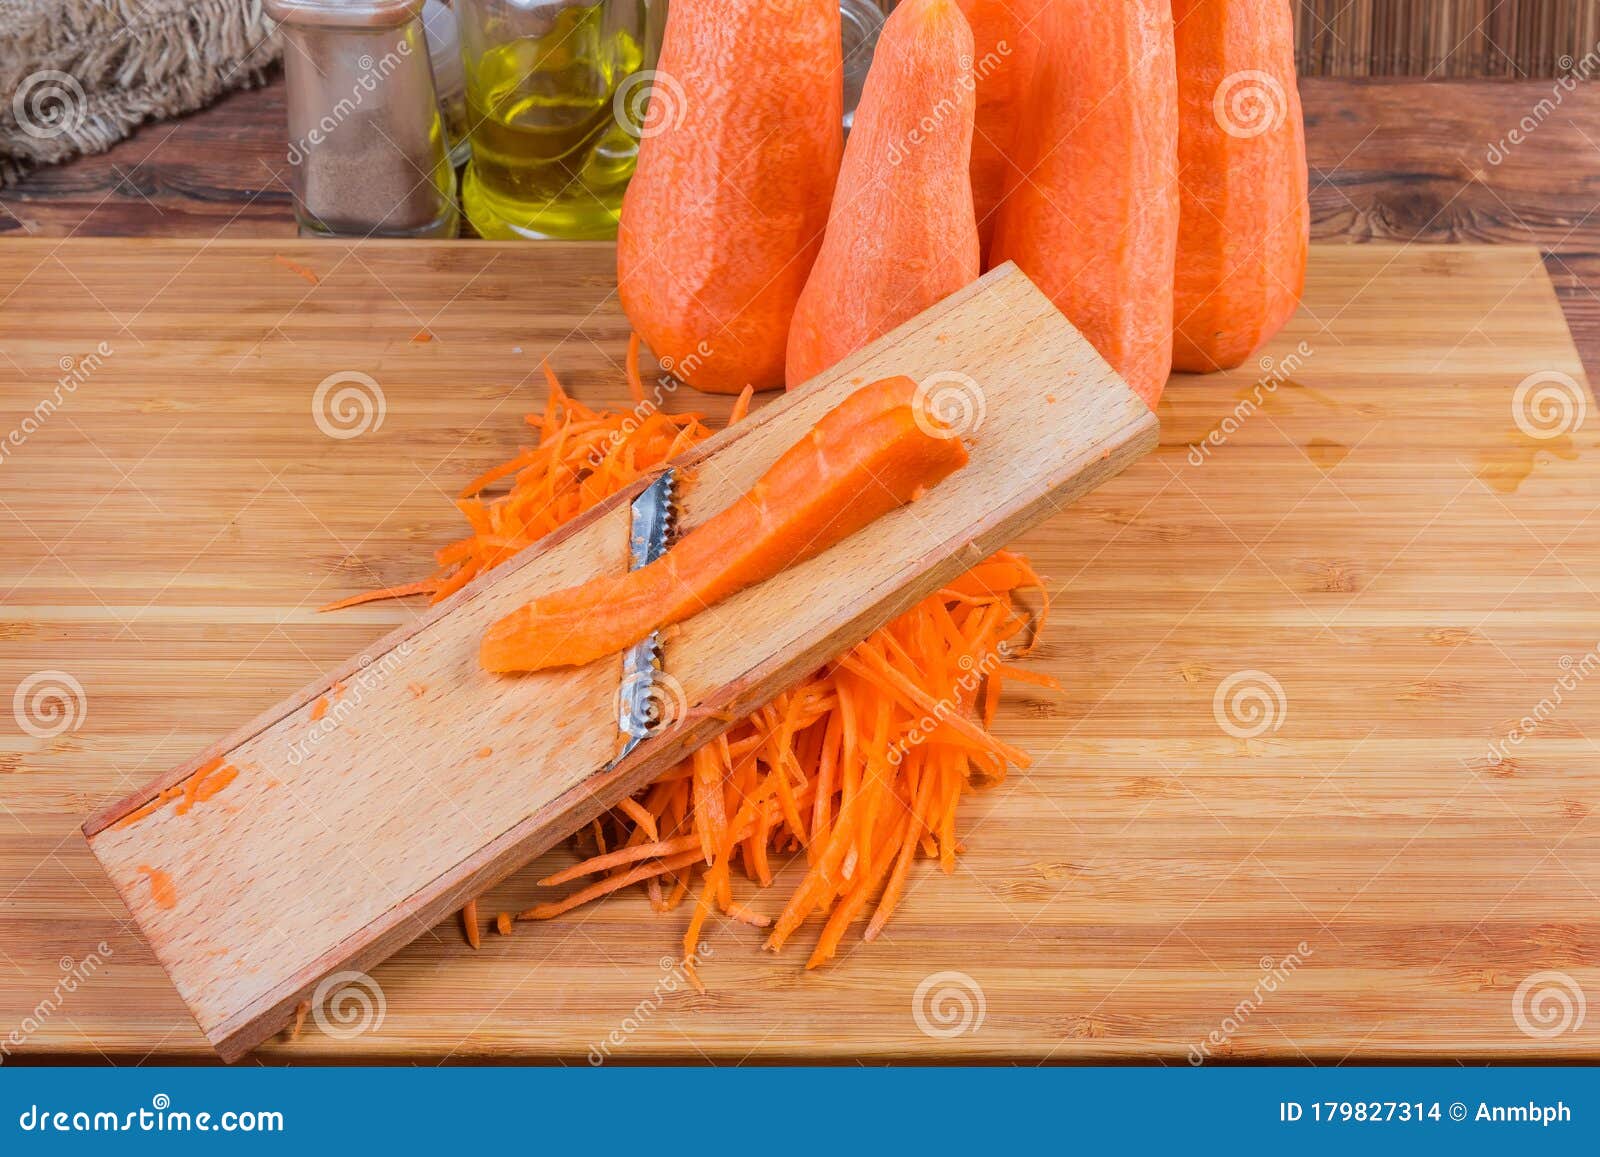 Carrot during Shredding on Grater for Korean Carrot Salad Prepare Stock  Photo - Image of koreanstyle, bamboo: 179827314